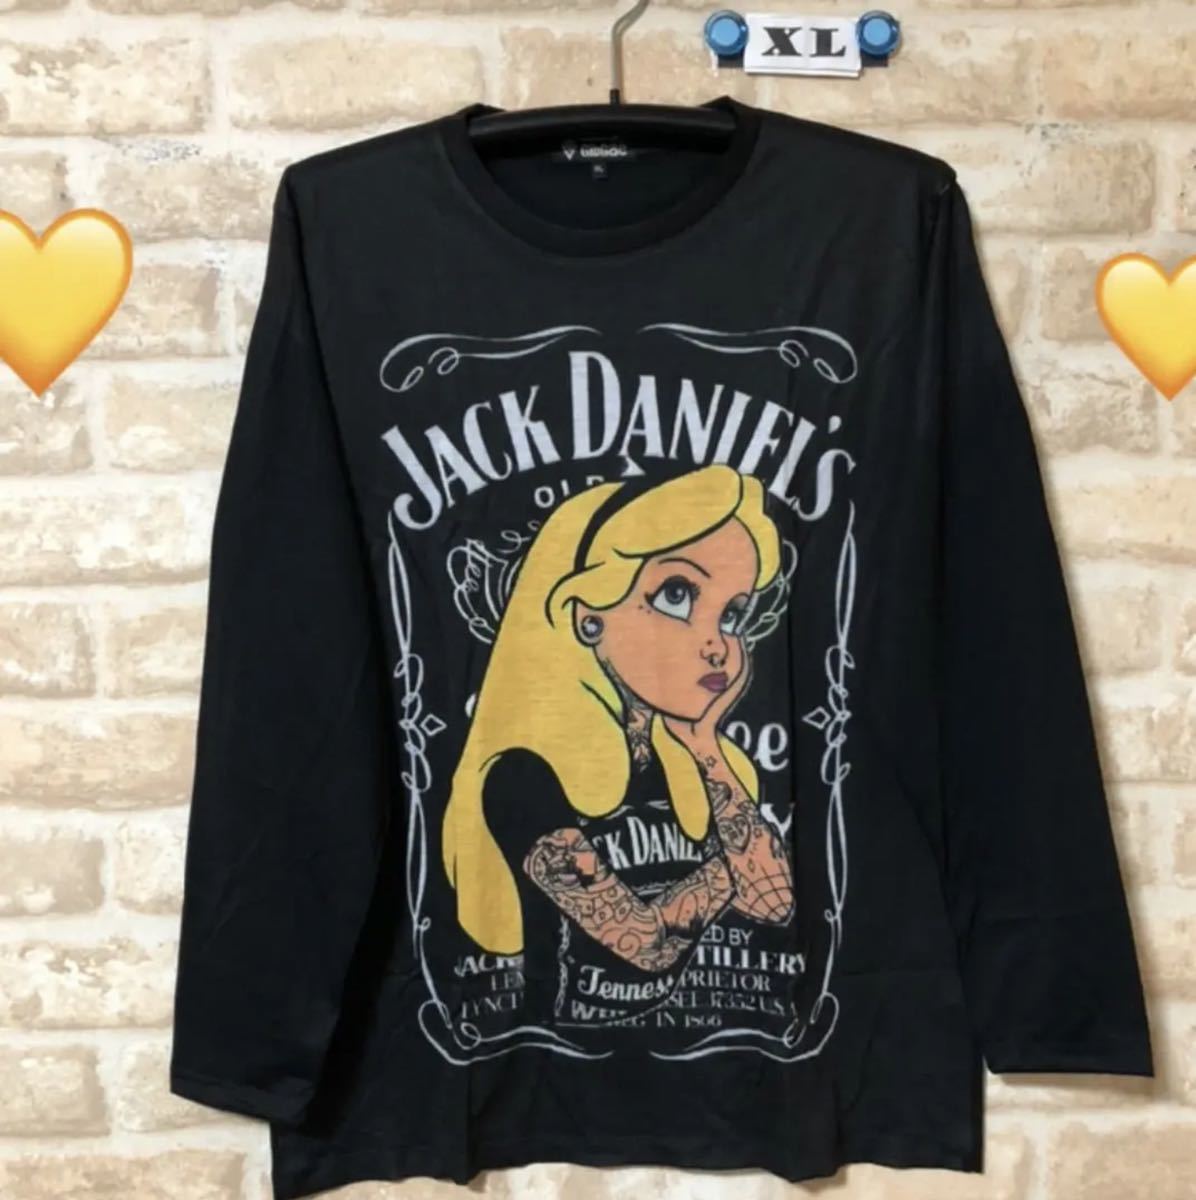  Jack Daniel Alice paro Dillon g футболка XL размер длинный рукав 